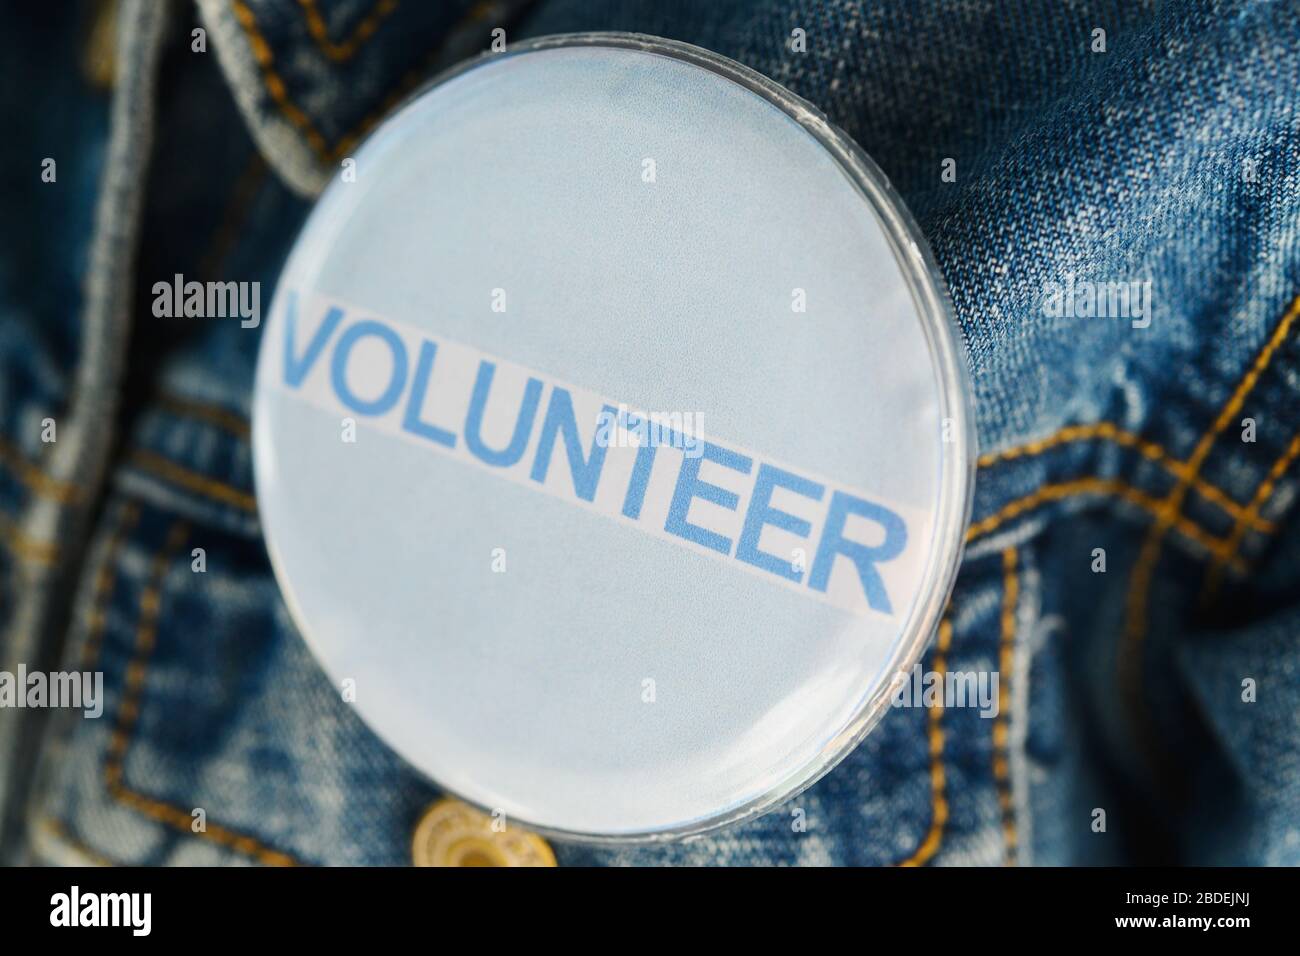 Close up of Volunteer button on denim jacket Stock Photo